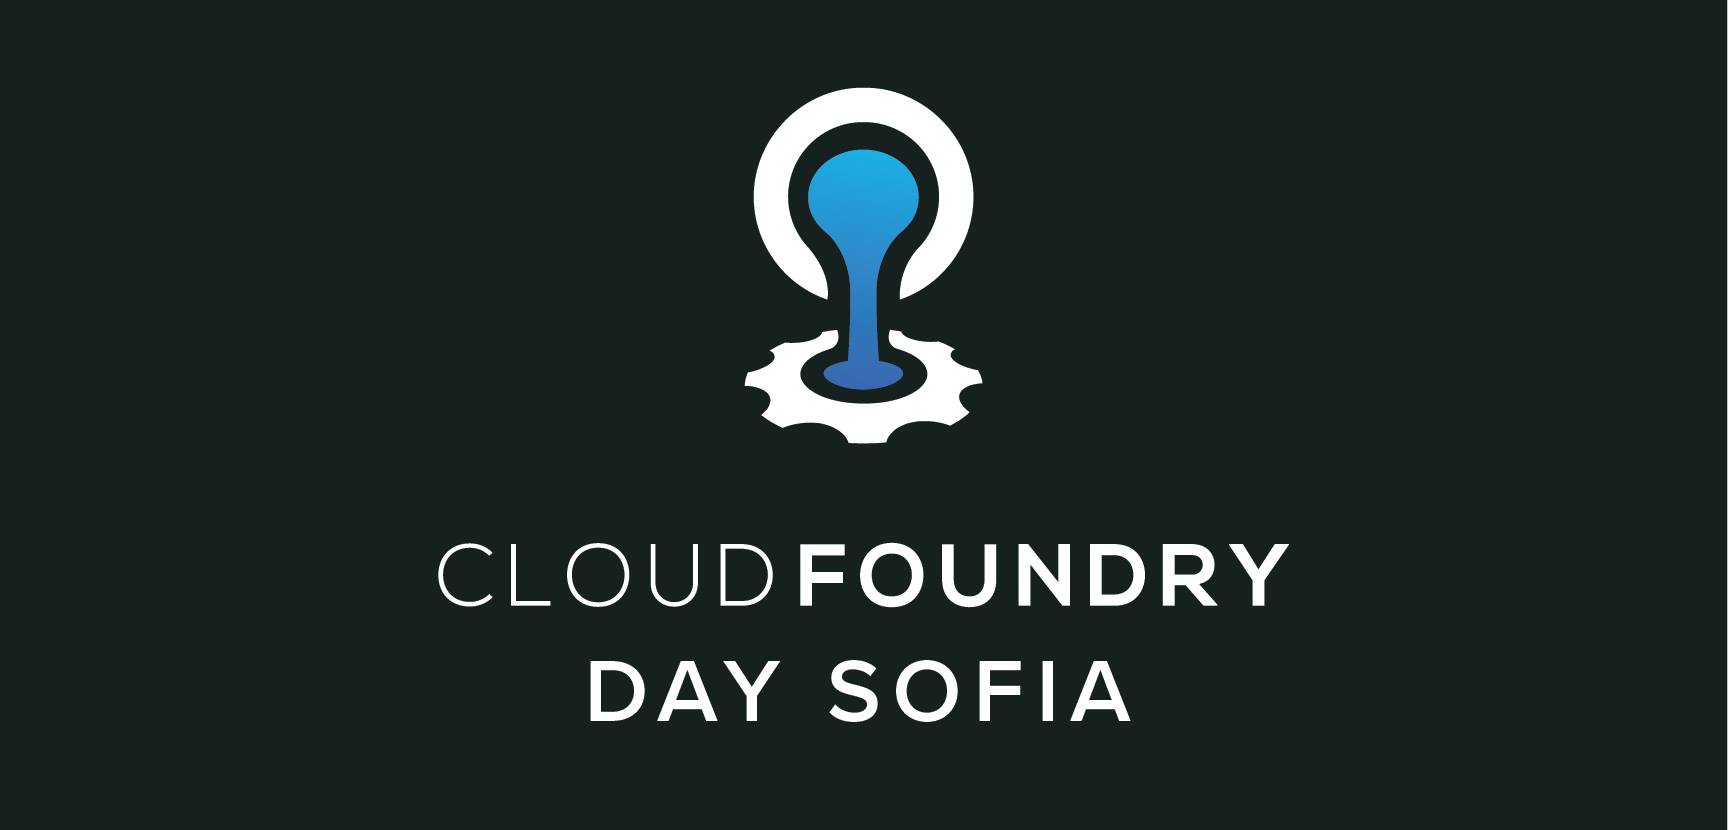 Cloud Foundry Day Sofia